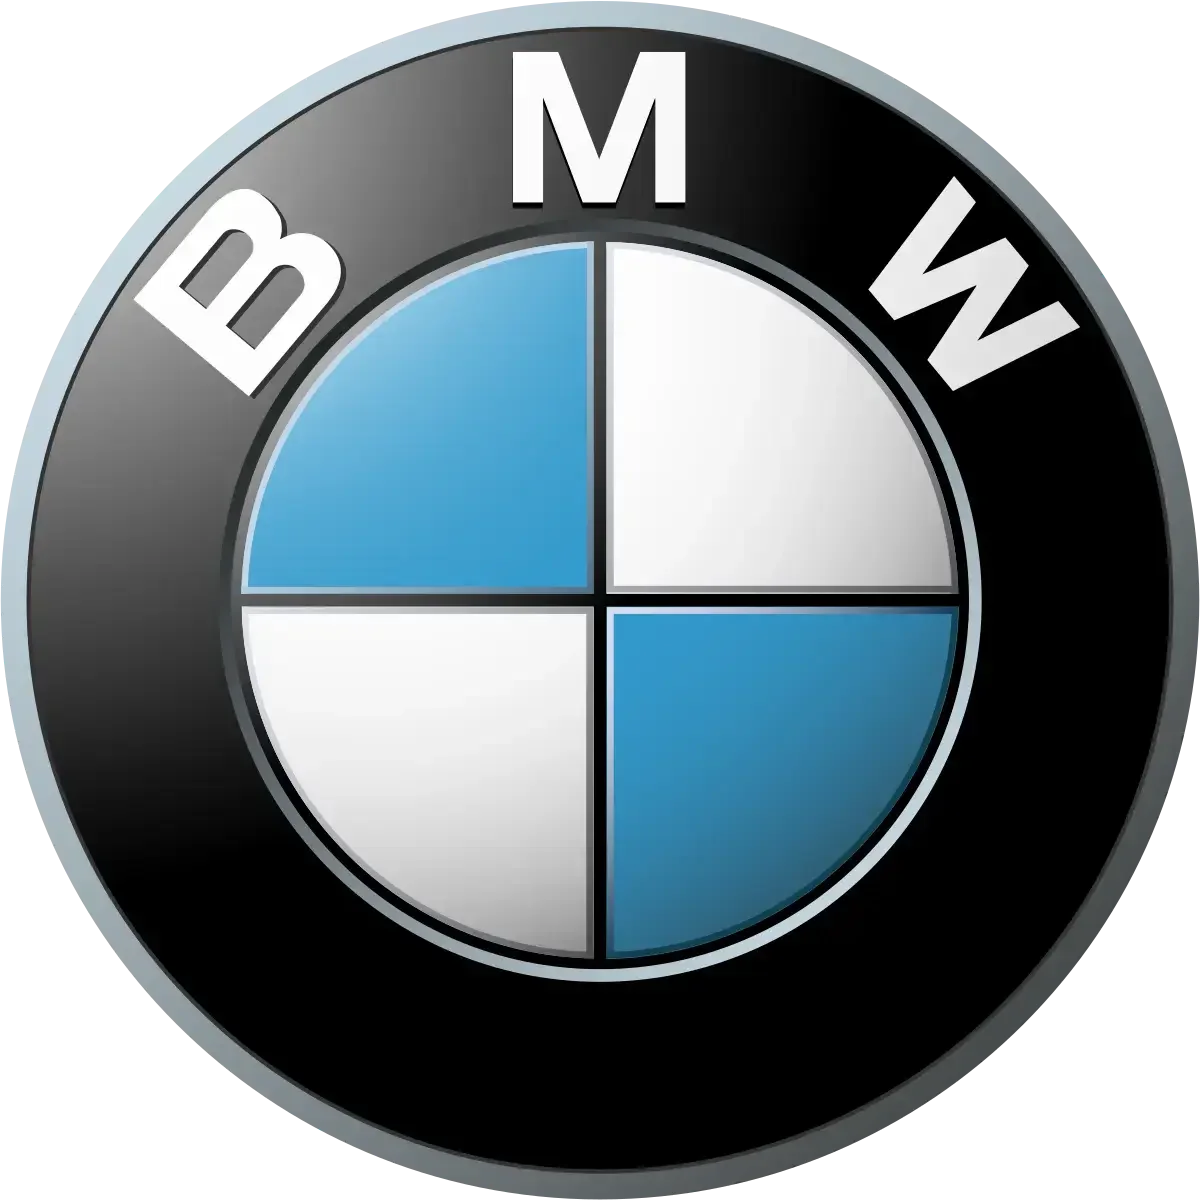 spyne helps BMW create high quality car images